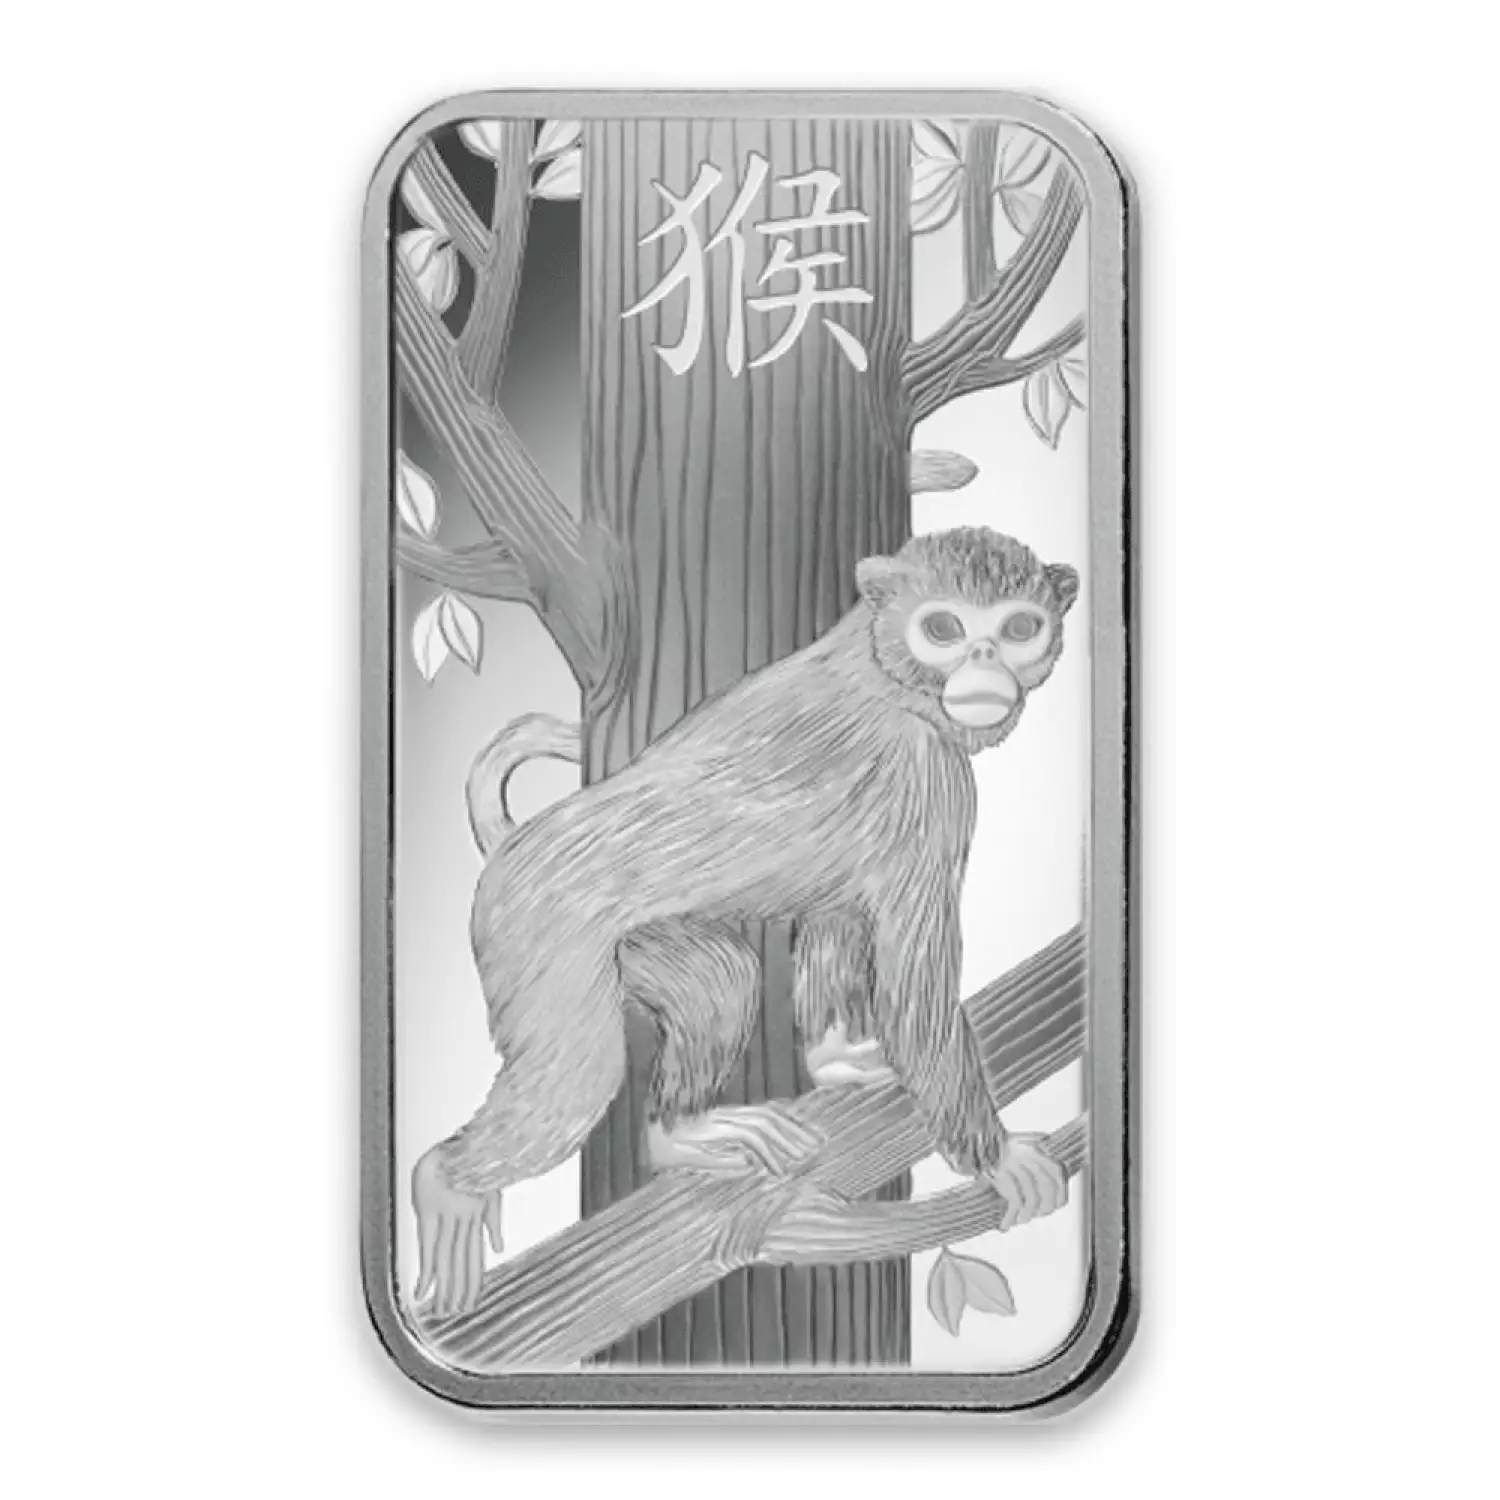 10g PAMP Silver Bar - Lunar Monkey (2)